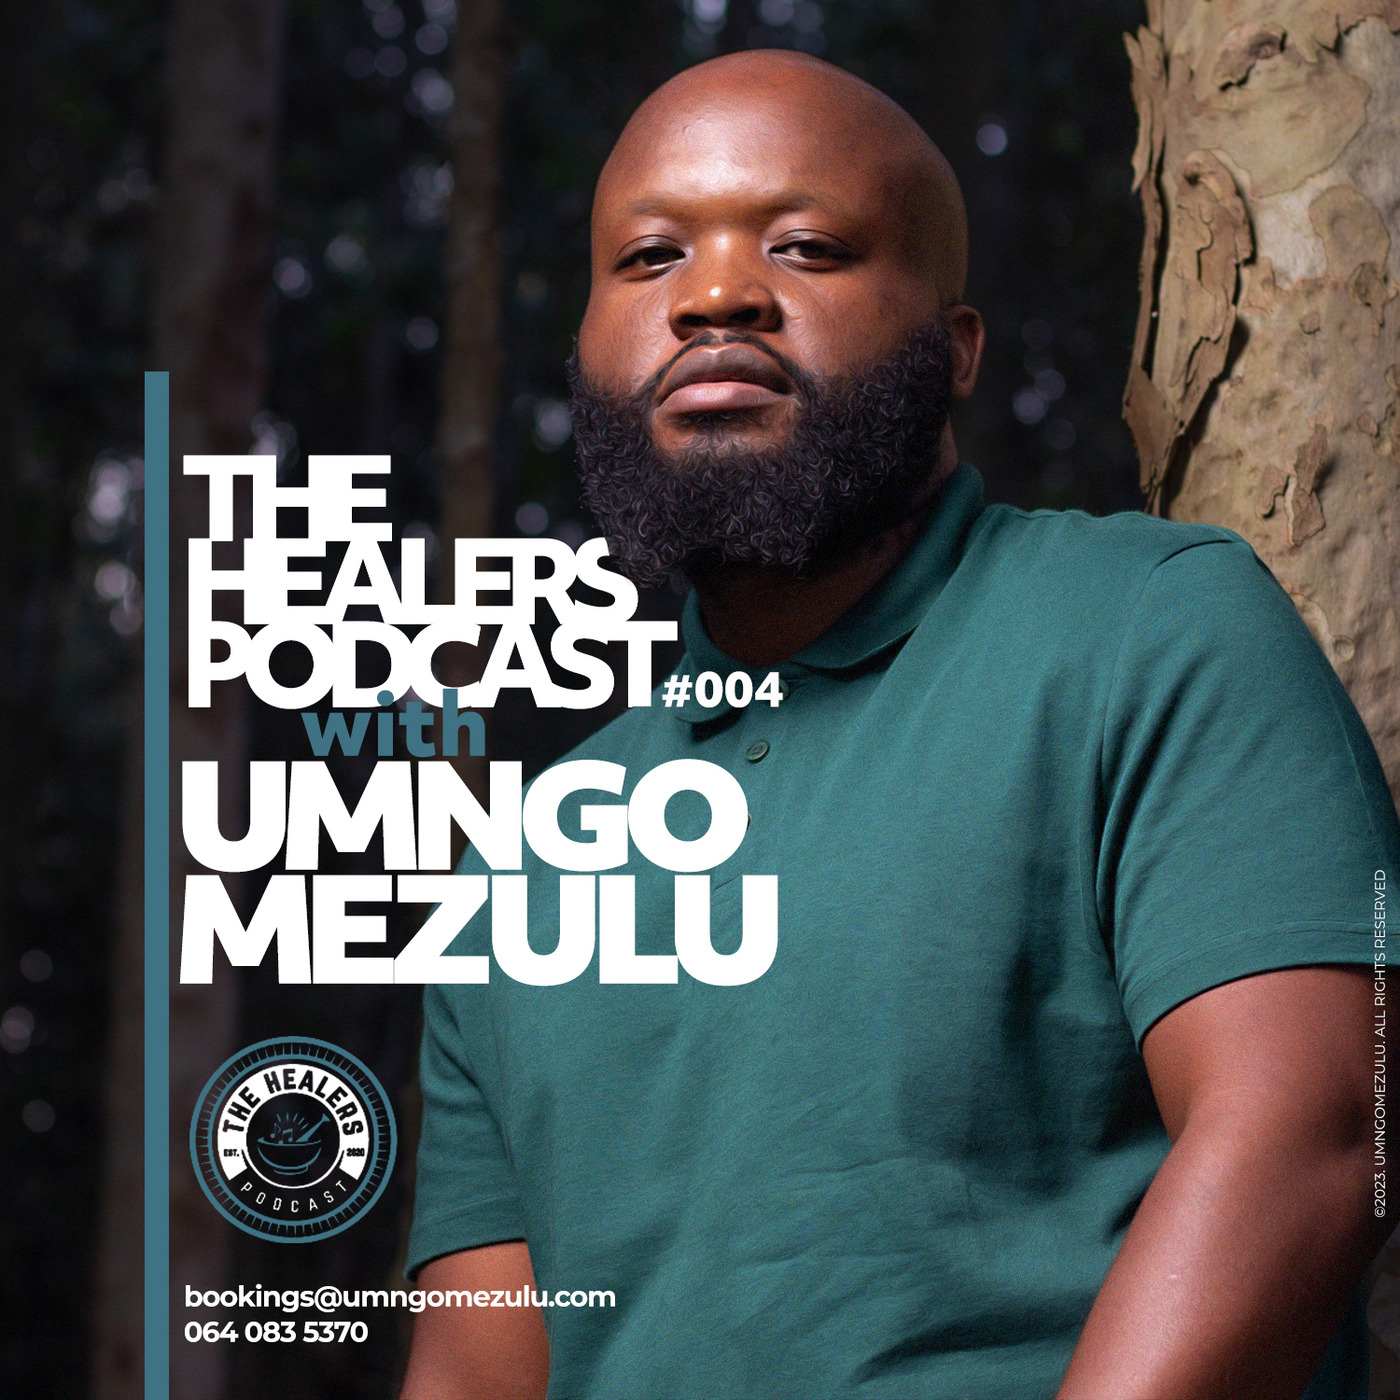 "Show 004" The Healers Podcast With UMngomezulu